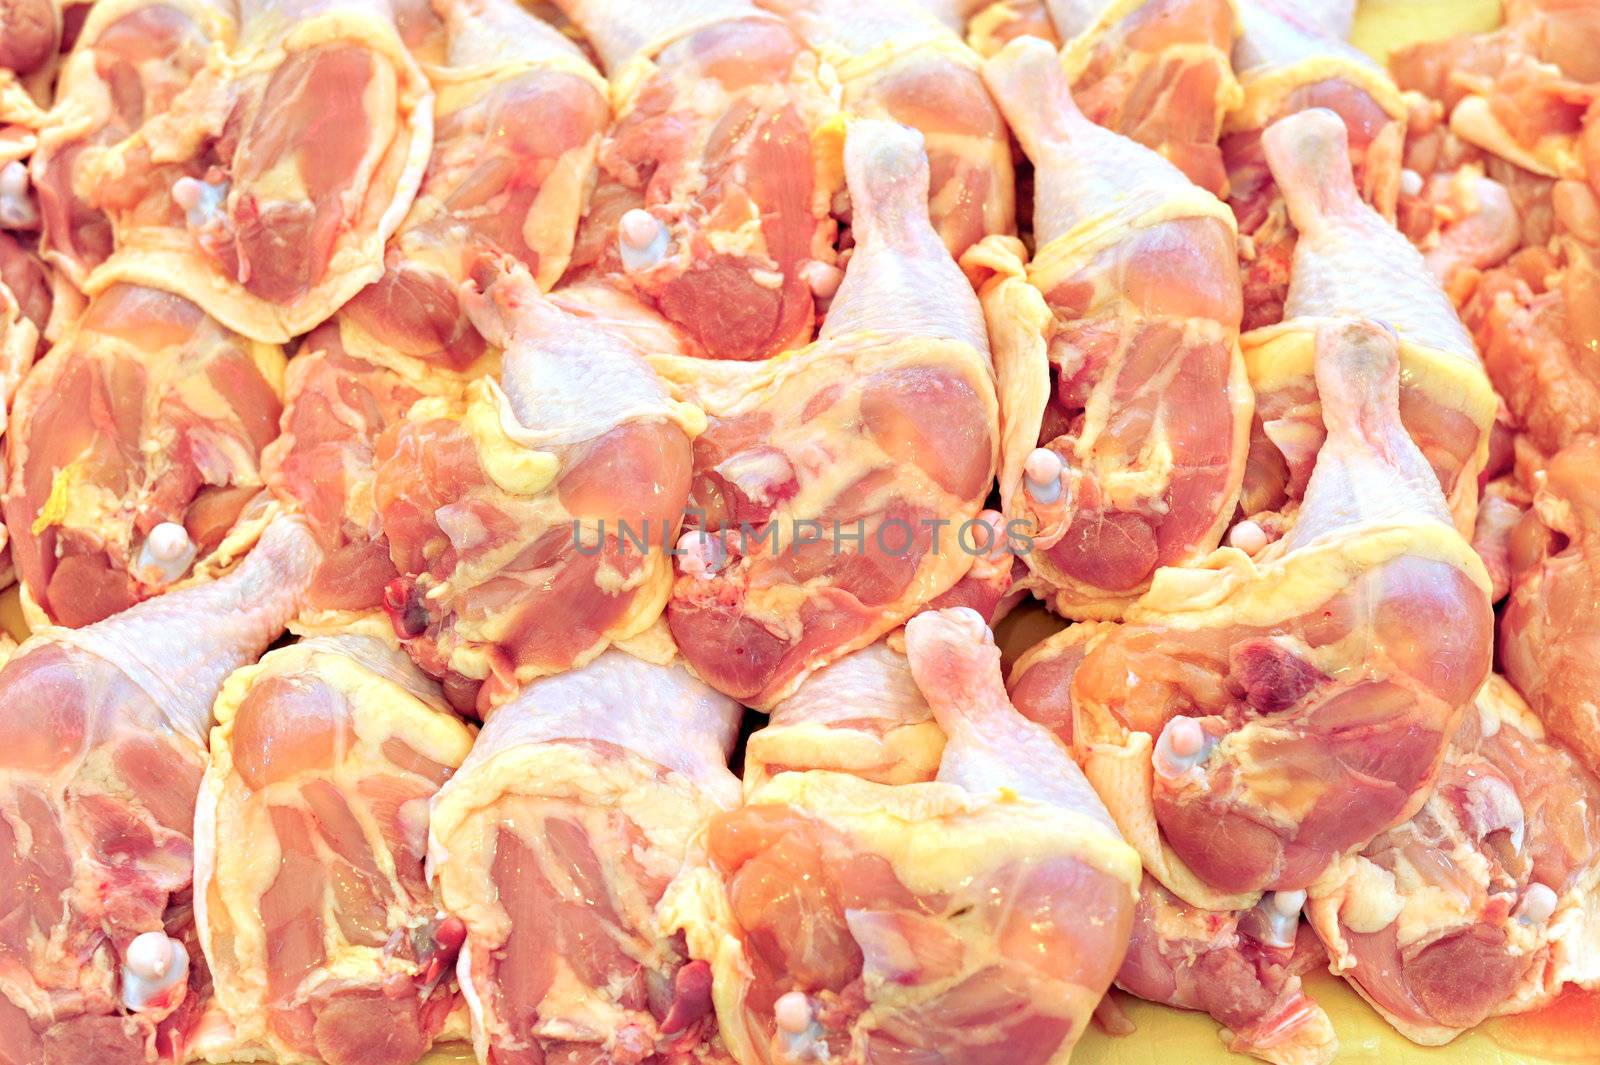 Chicken meat in market